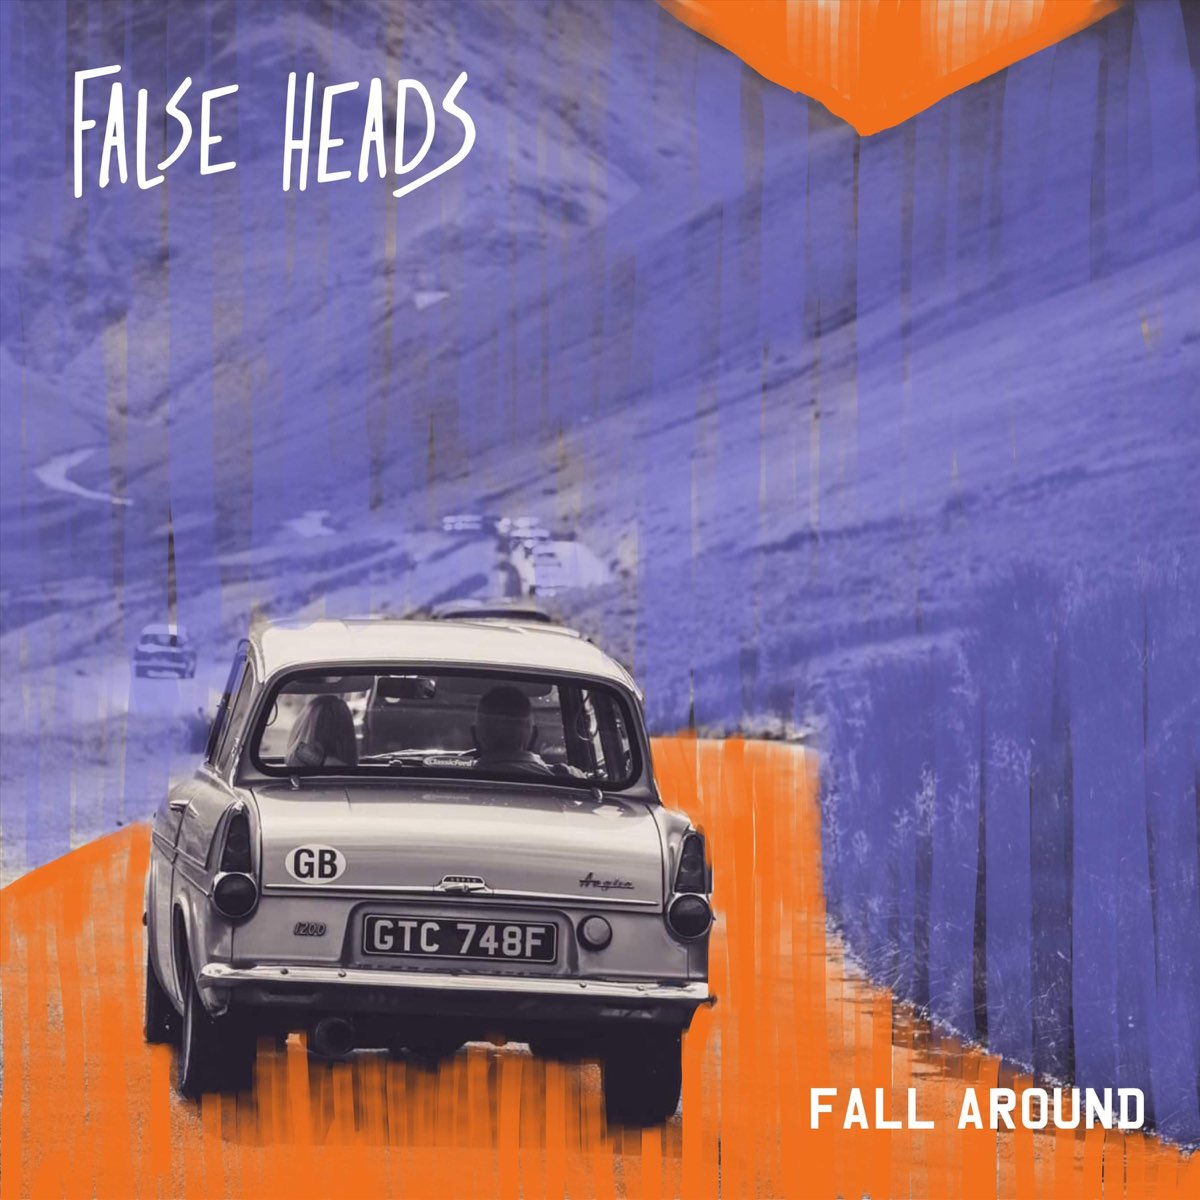 False heads Band. Fall around